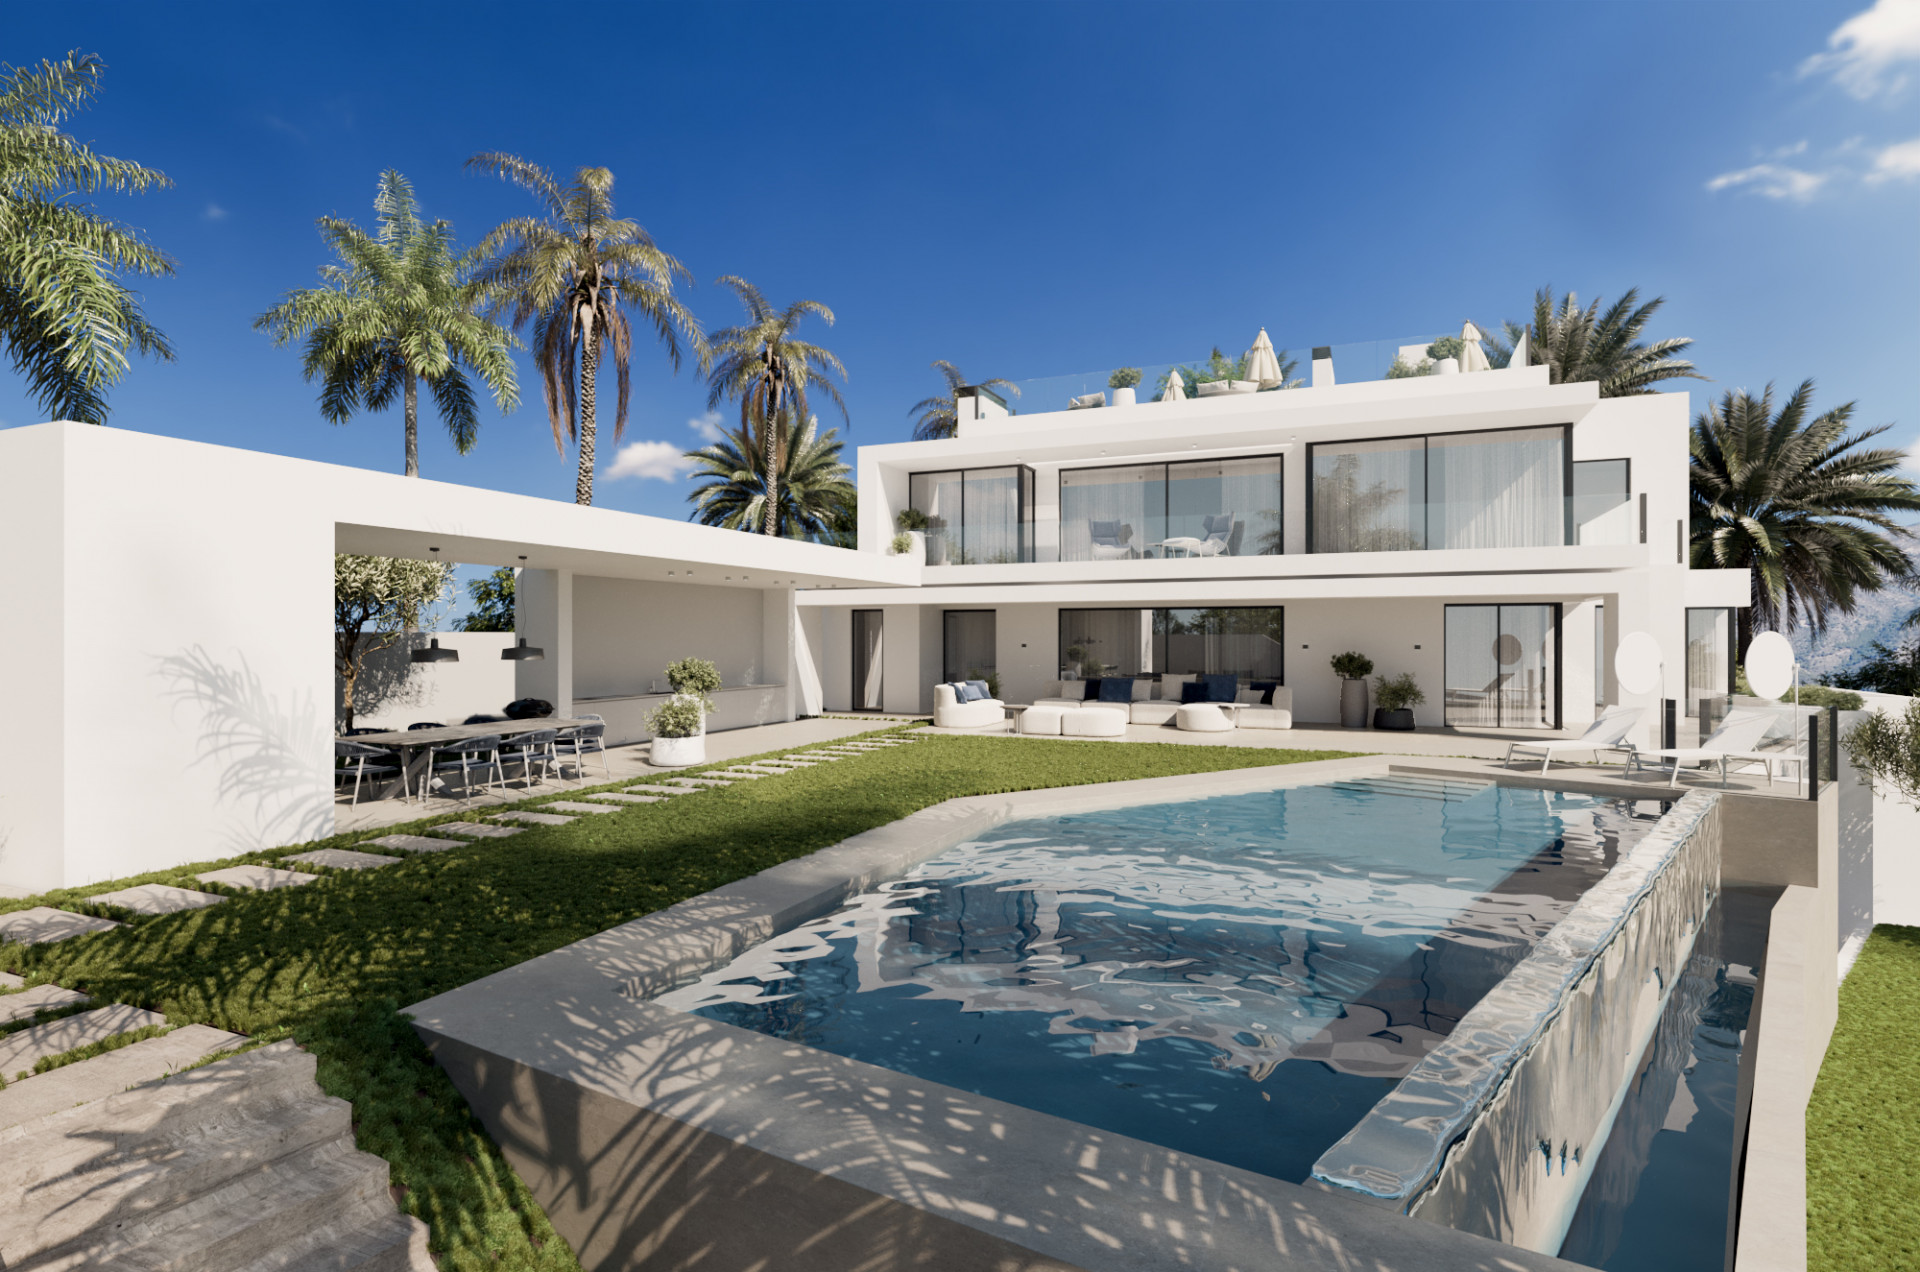 Fabulous contemporary style villa with 6 bedrooms in the exclusive area of Cascada de Camoján, Marbella.